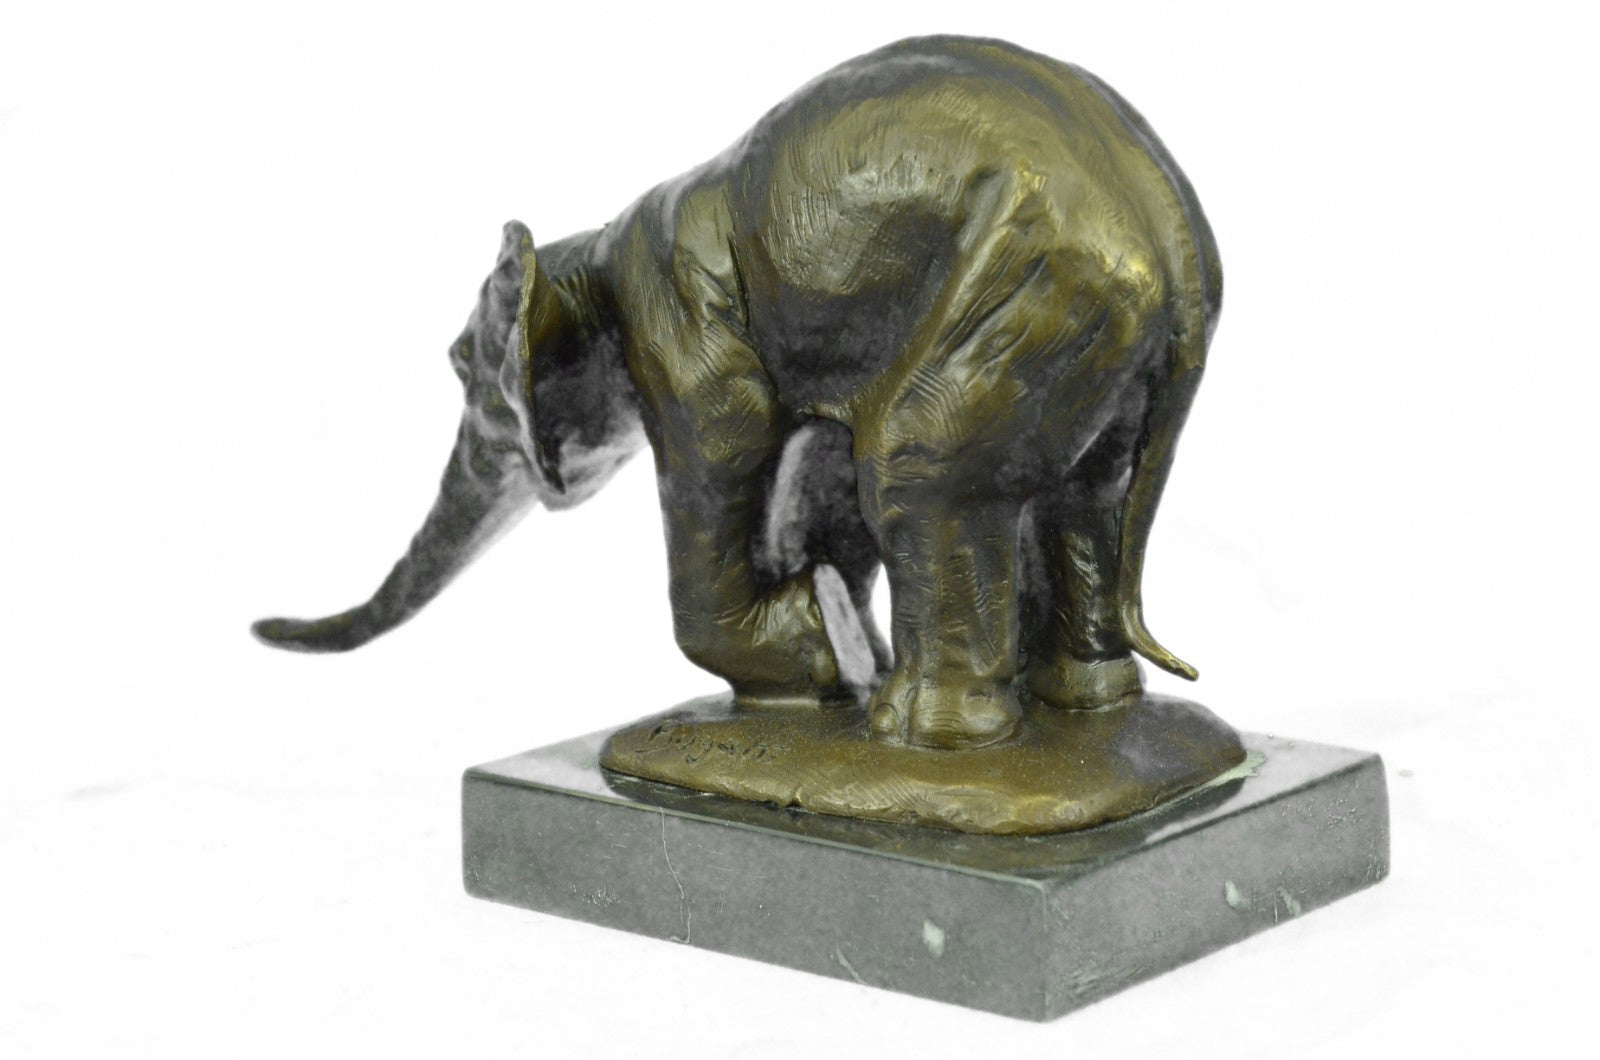 Hot Cast Lucky Elephant by Bugatti Bronze Sculpture Home Cabin Decoration